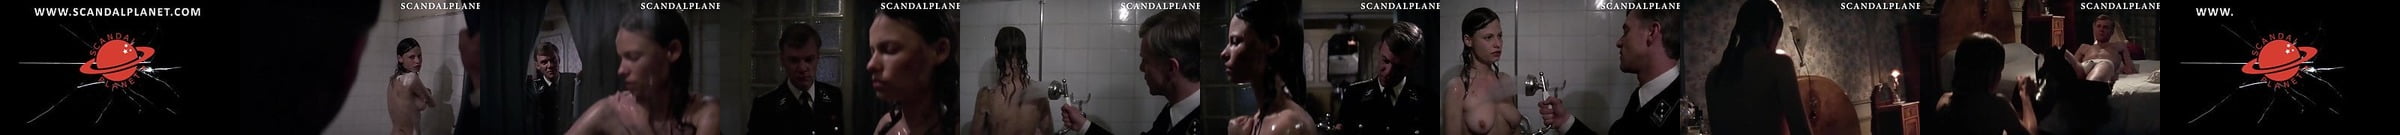 Alex Meneses Nude In Amanda And The Alien Scandalplanet Xhamster 